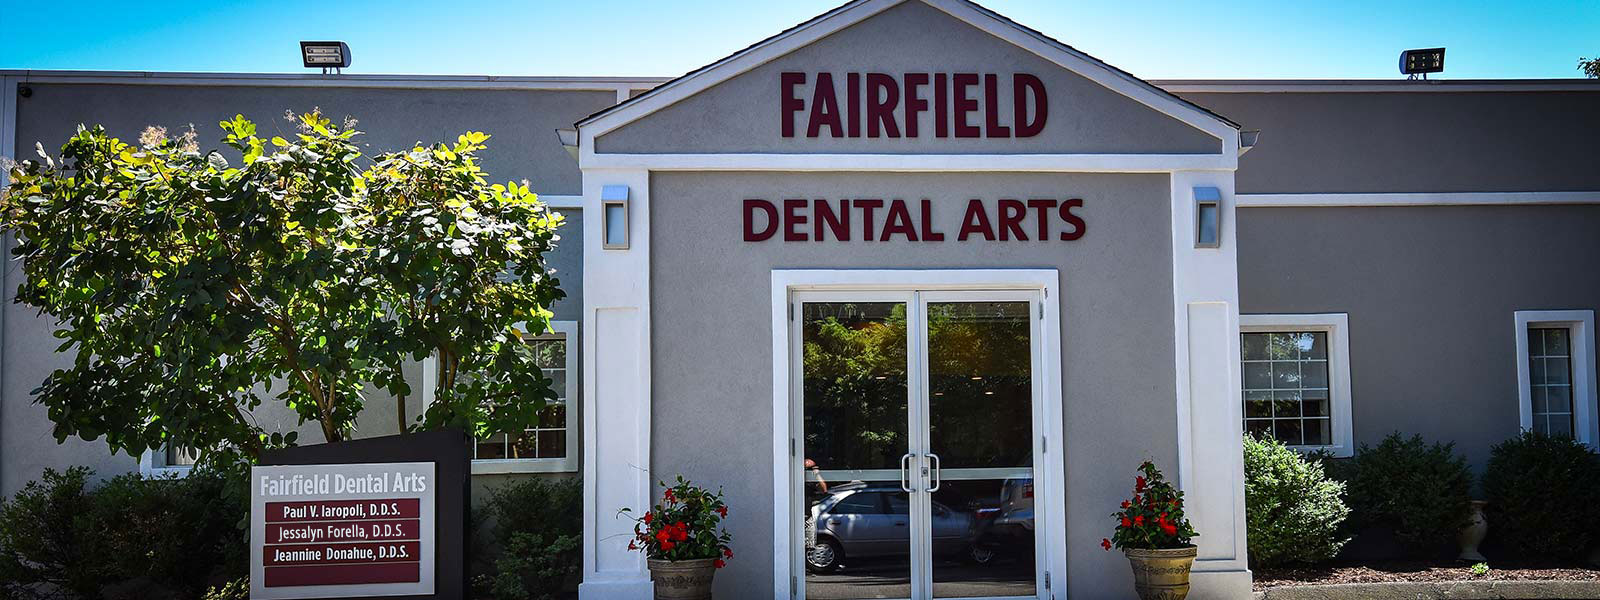 Fairfield Dental Arts front entrance.